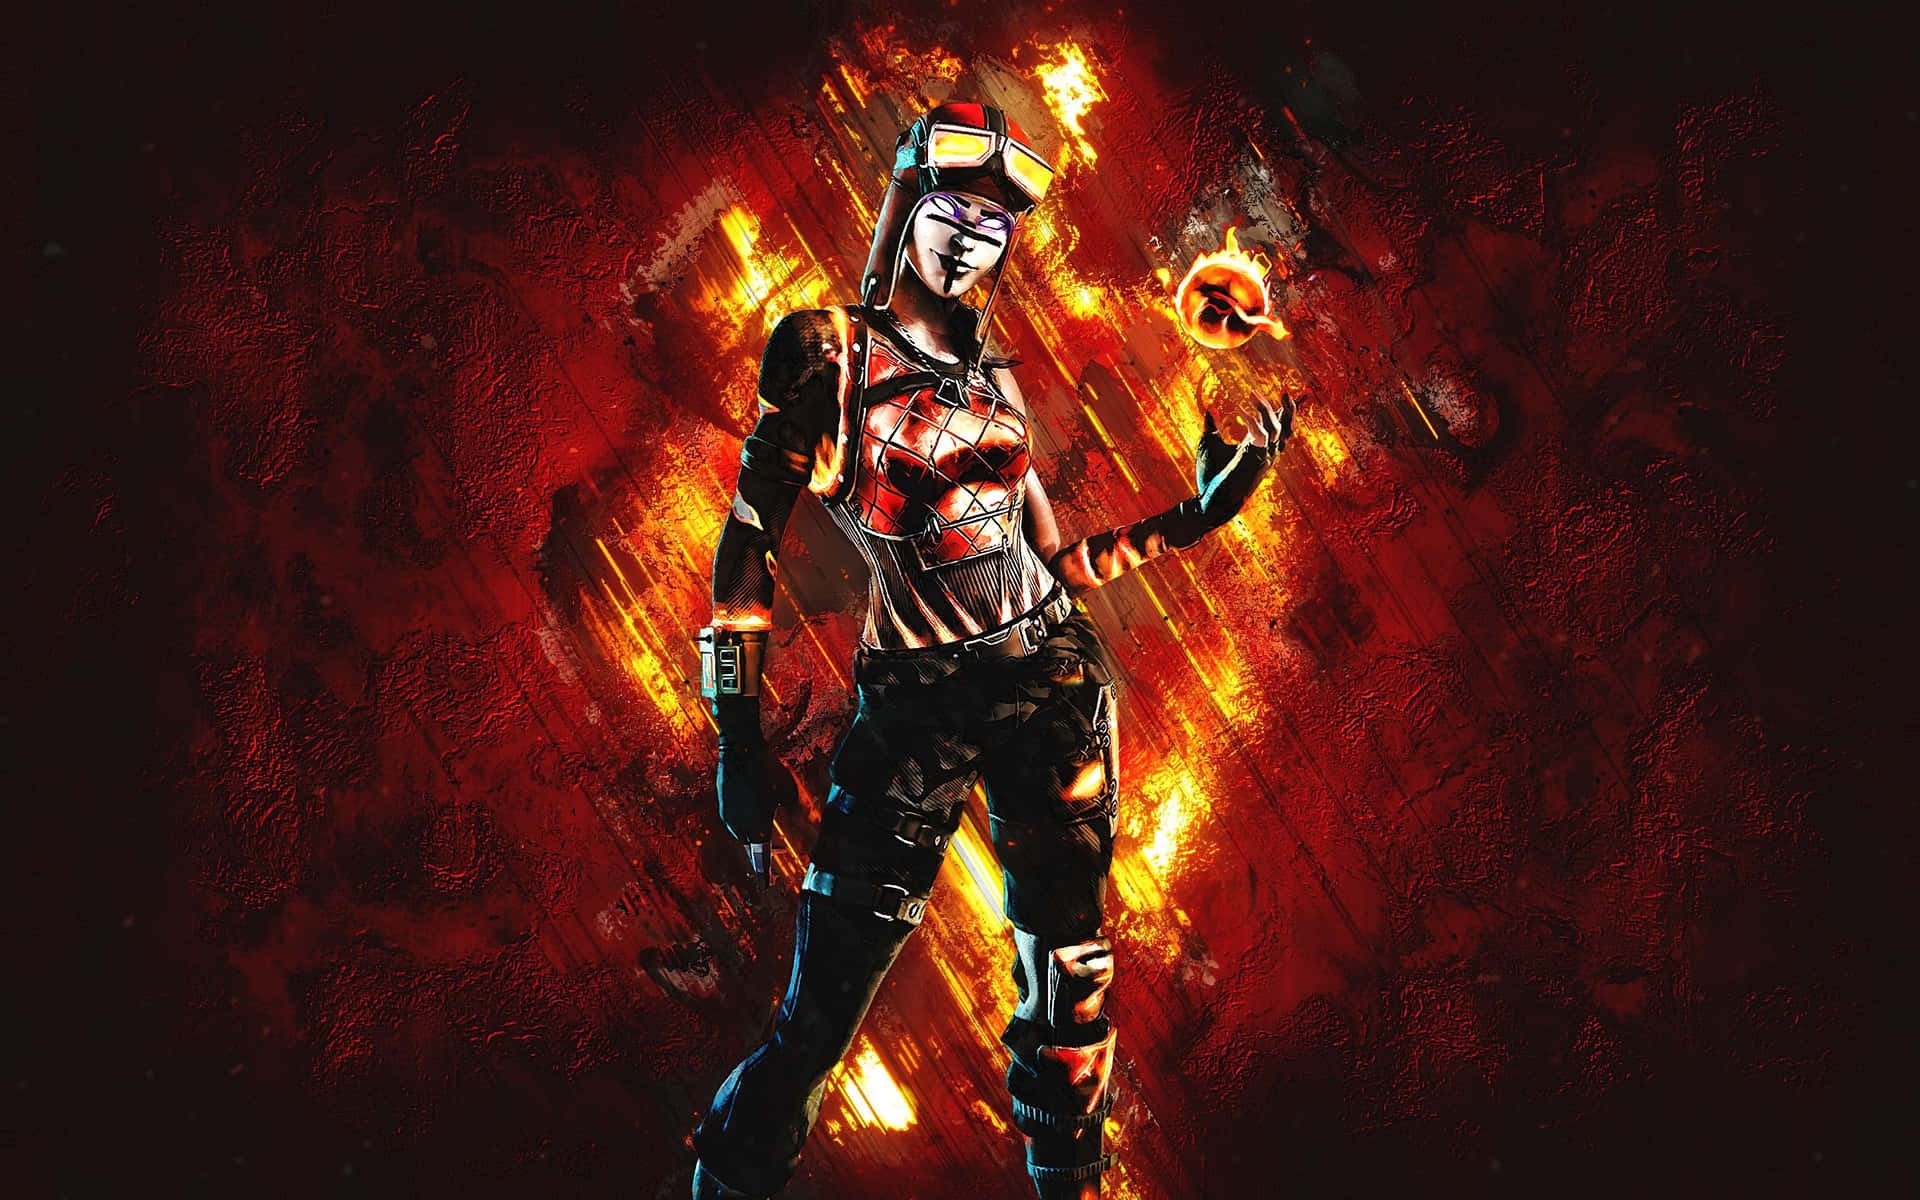 A portrait of the Fortnite character Blaze Wallpaper